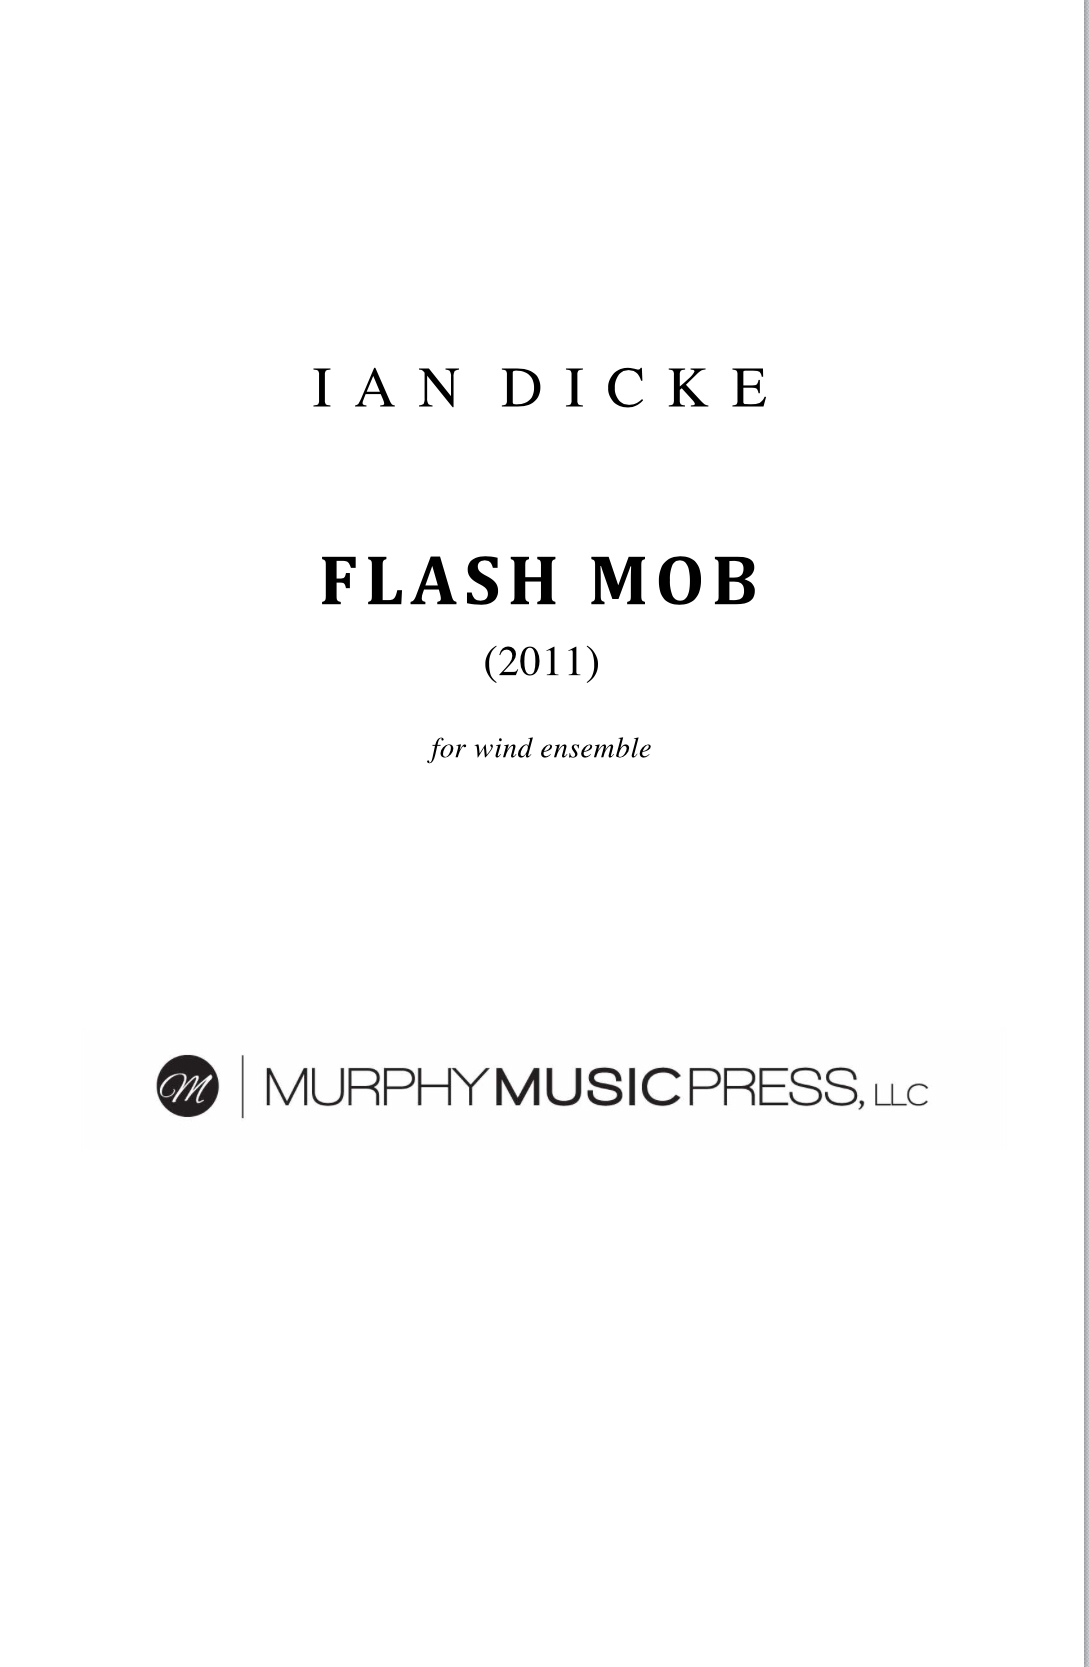 Flash Mob by Ian Dicke